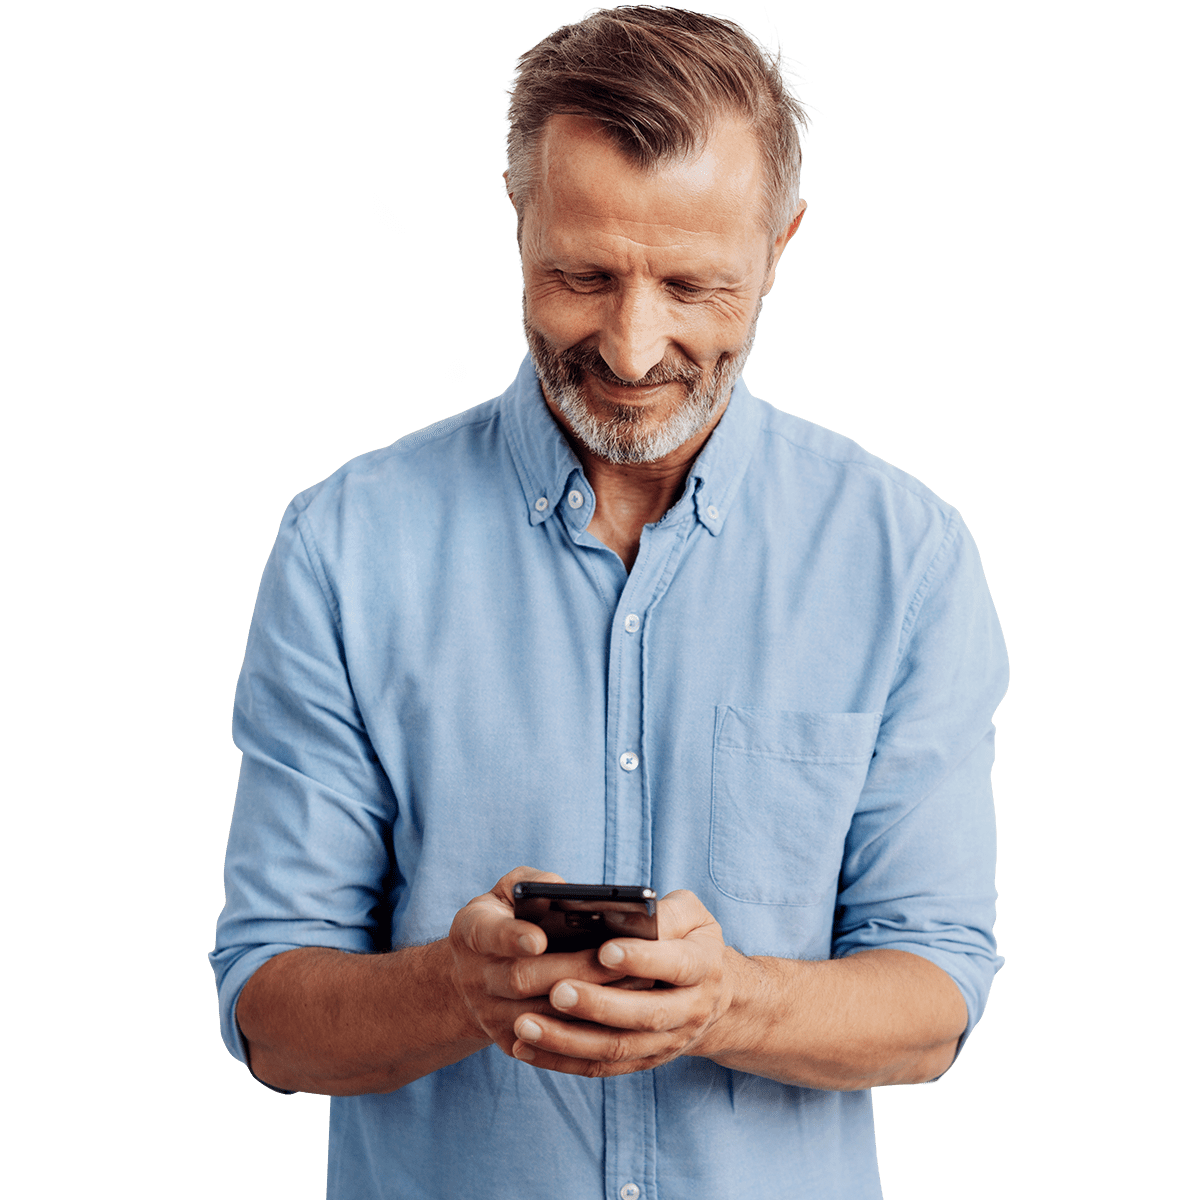 Home sorrinte consultando un smartphone